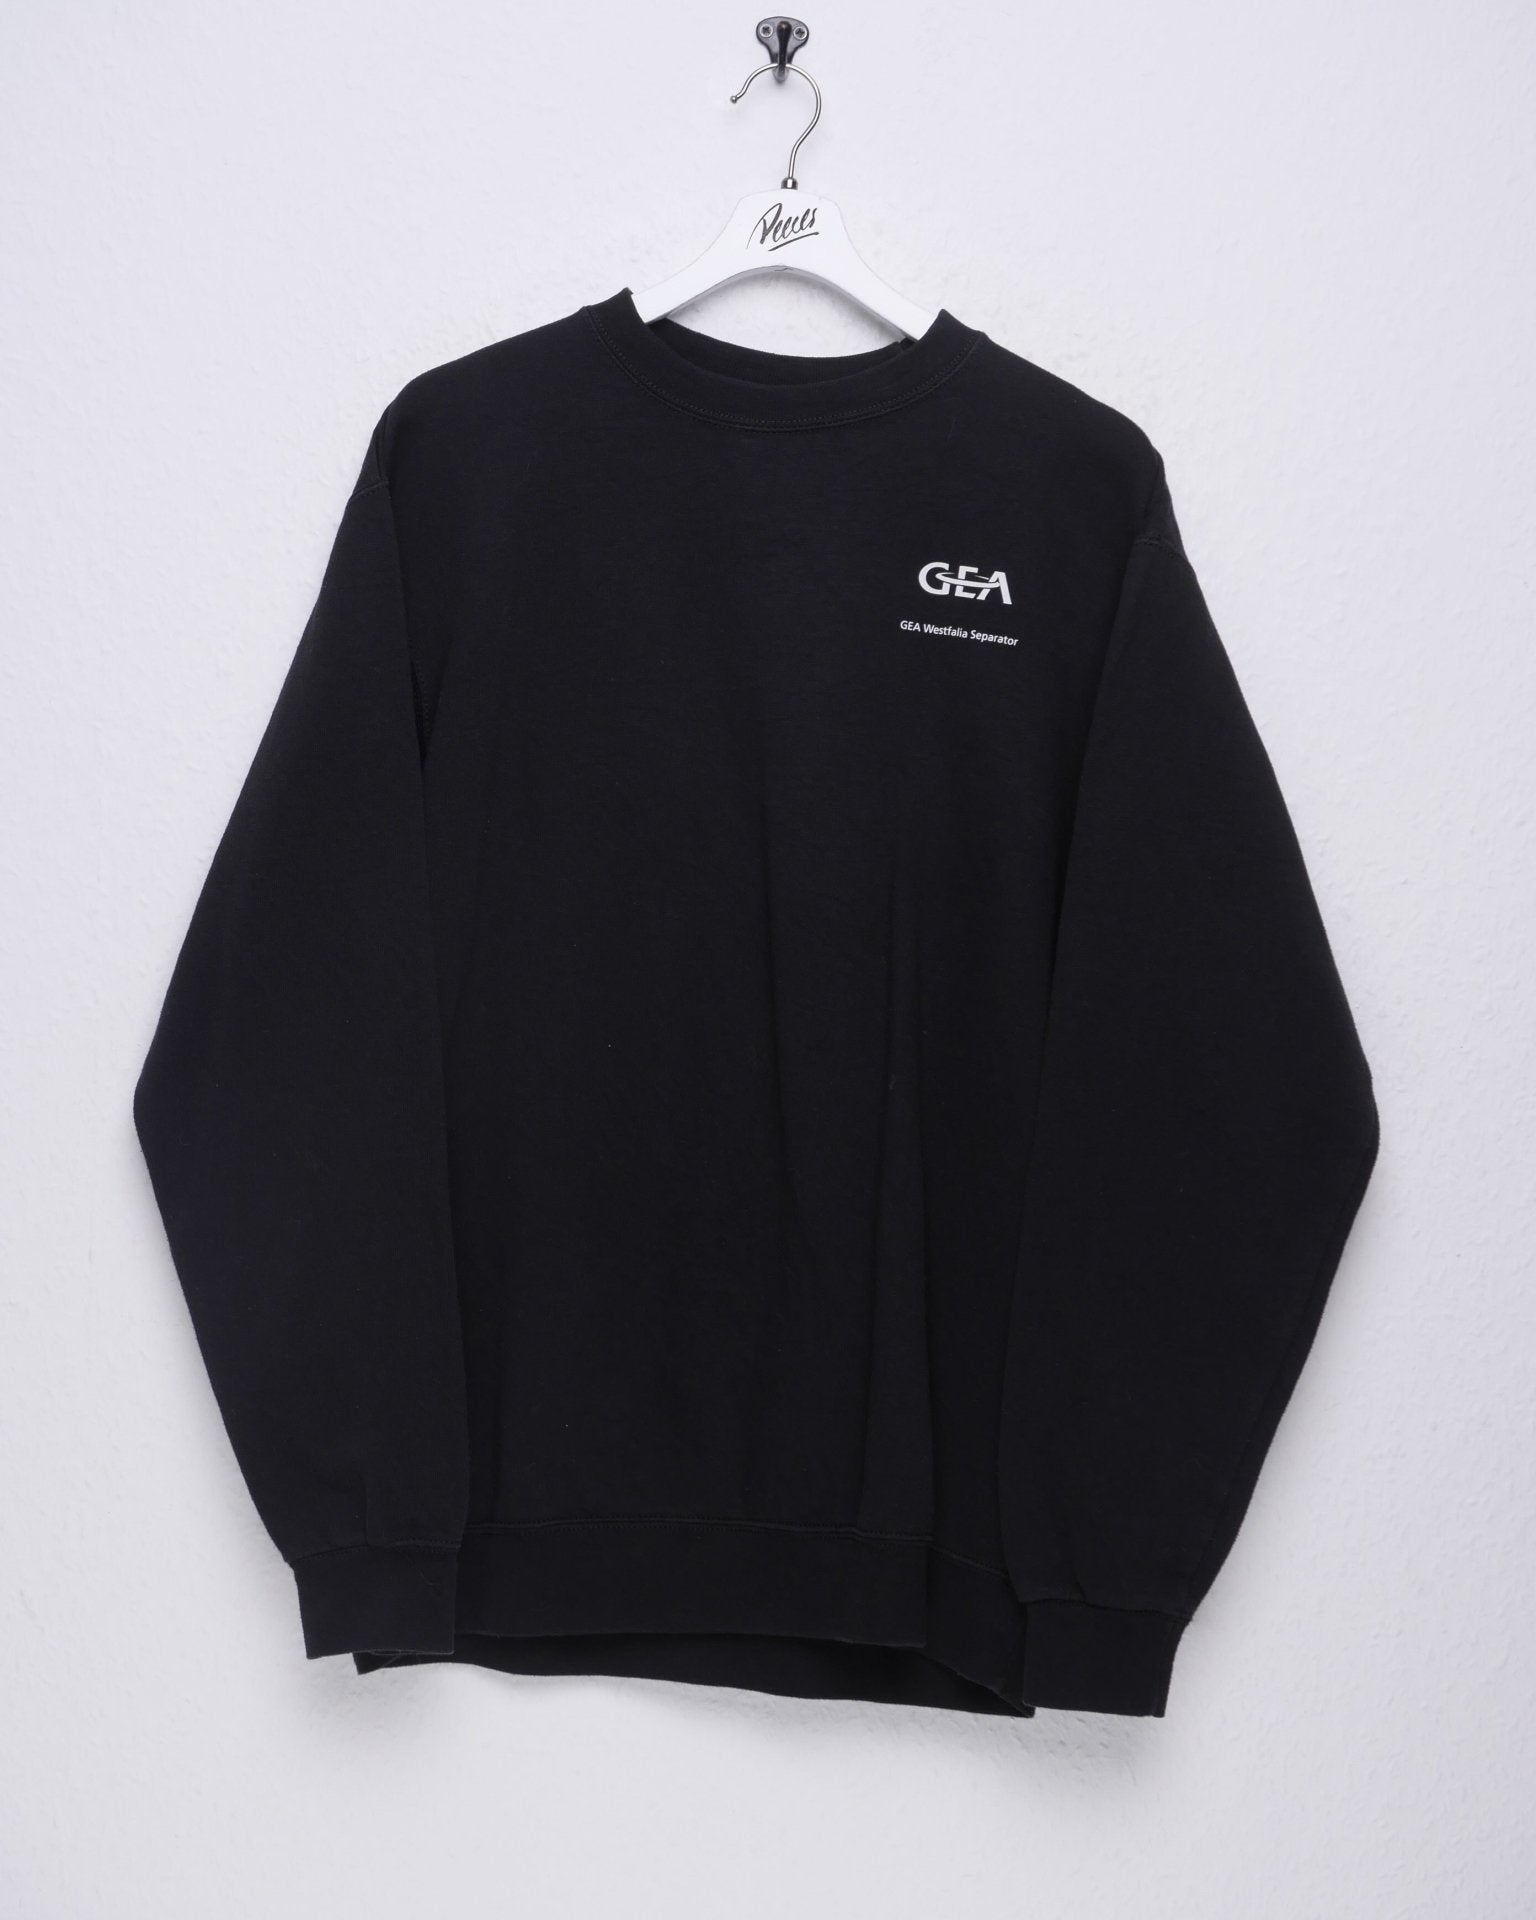 GEA Westfalia Separator printed Logo black Sweater - Peeces